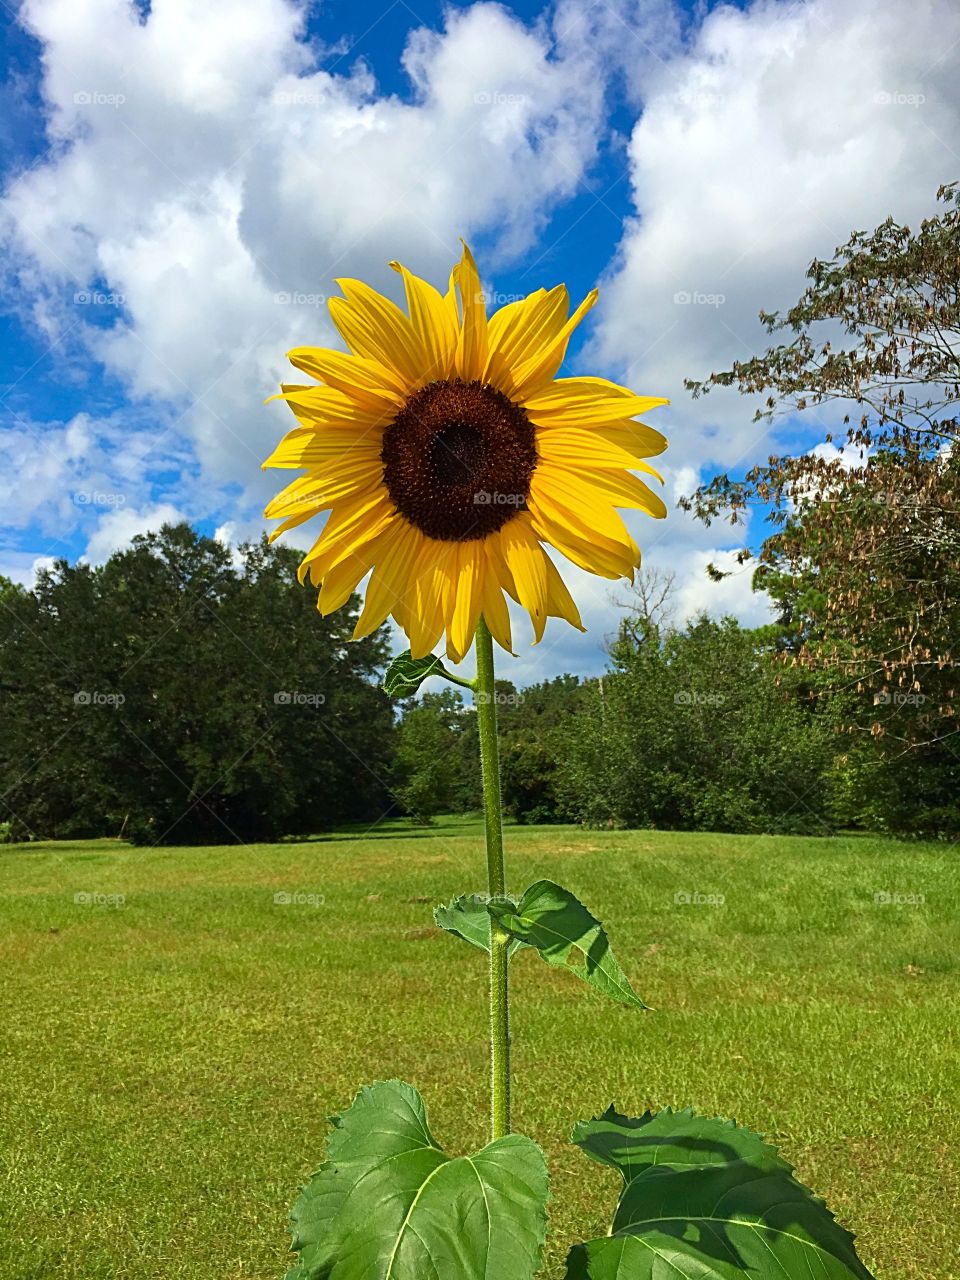 Sunflower love
